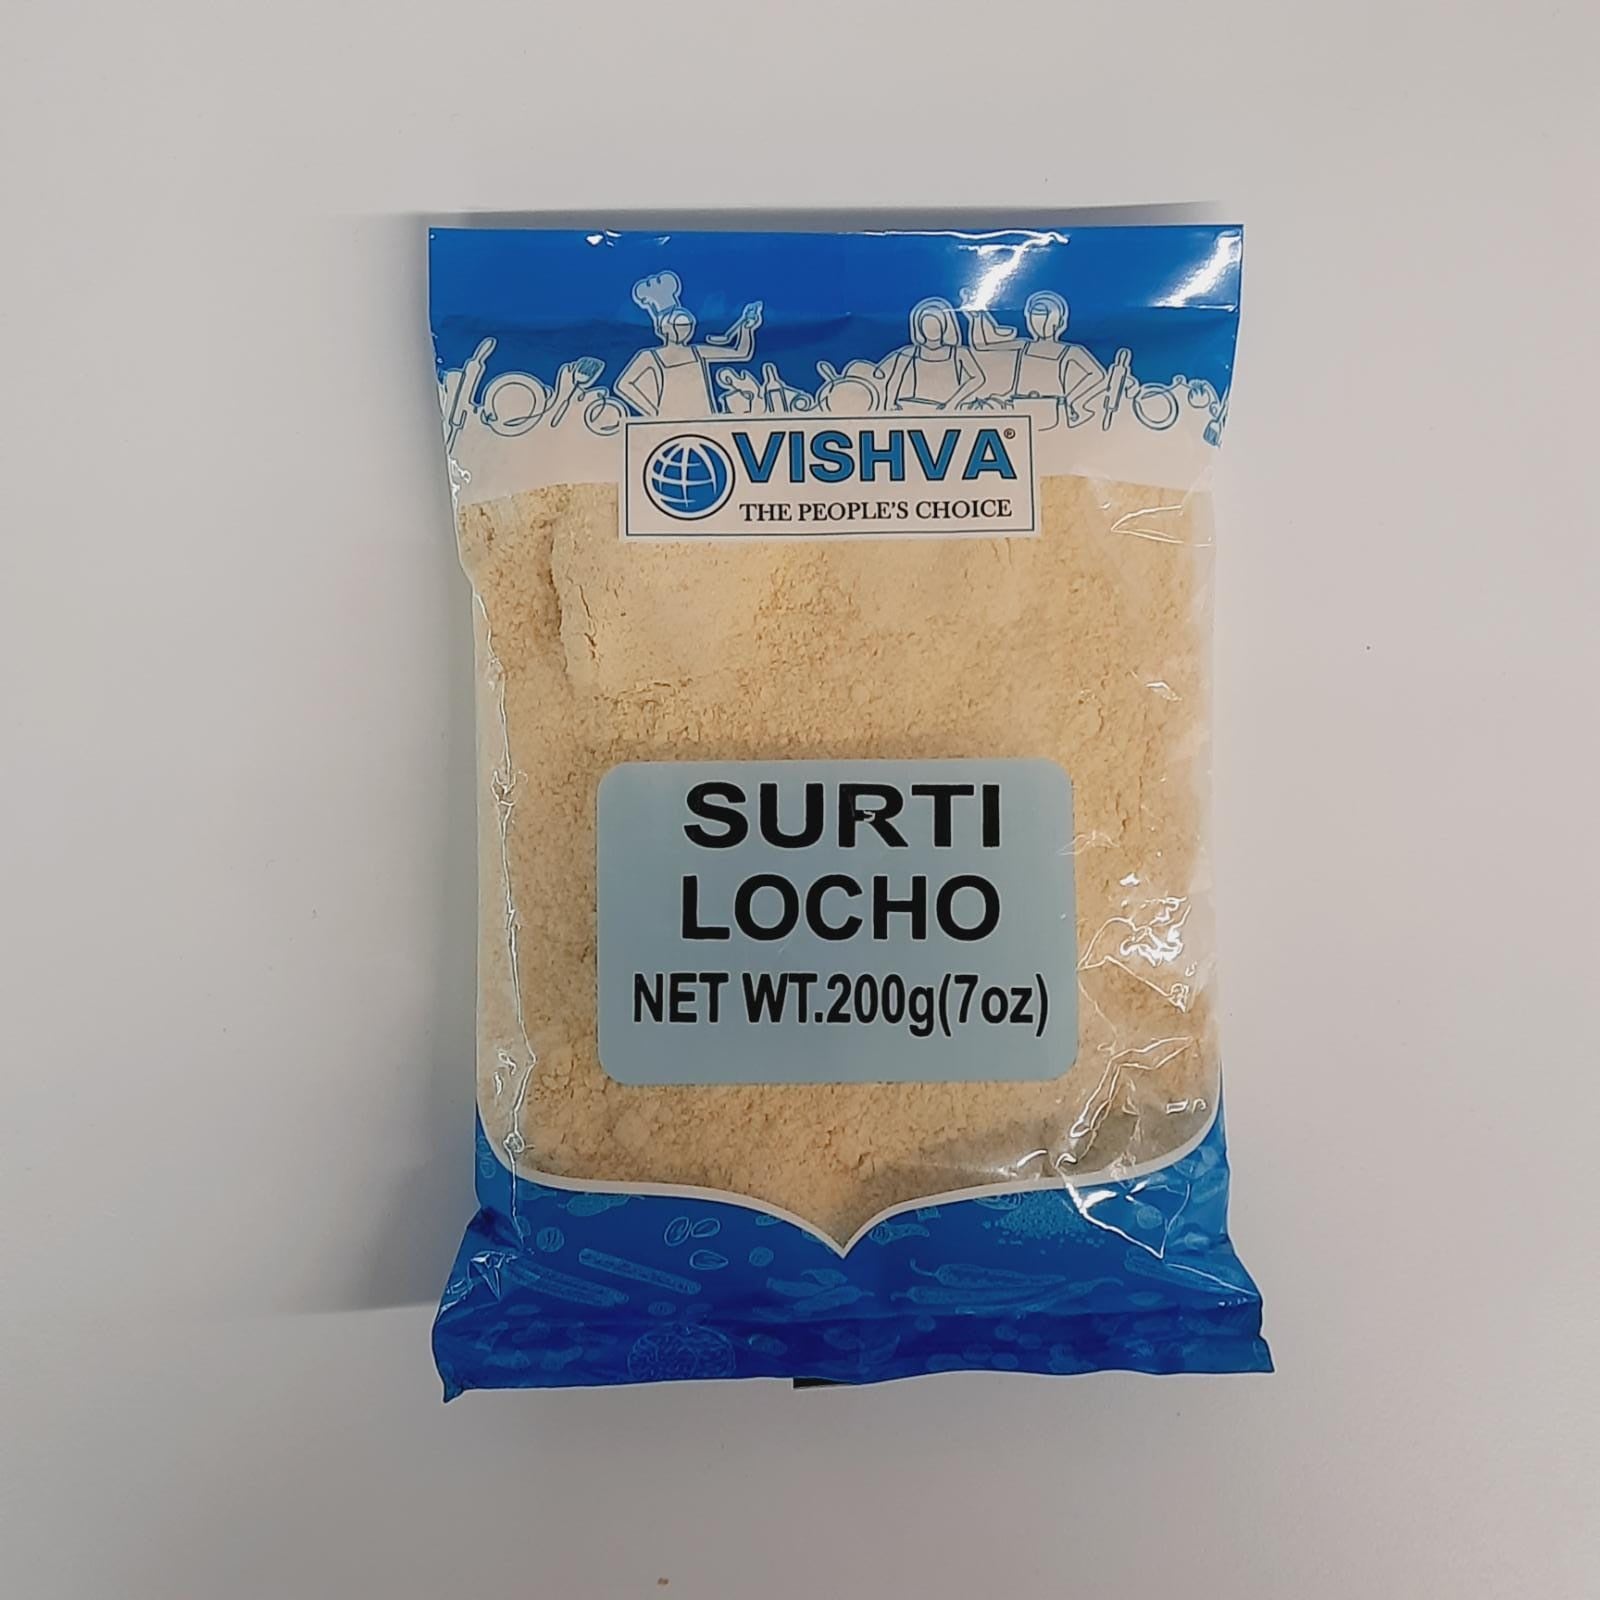 Vishva -  Surti Locho Instant Mix 200g